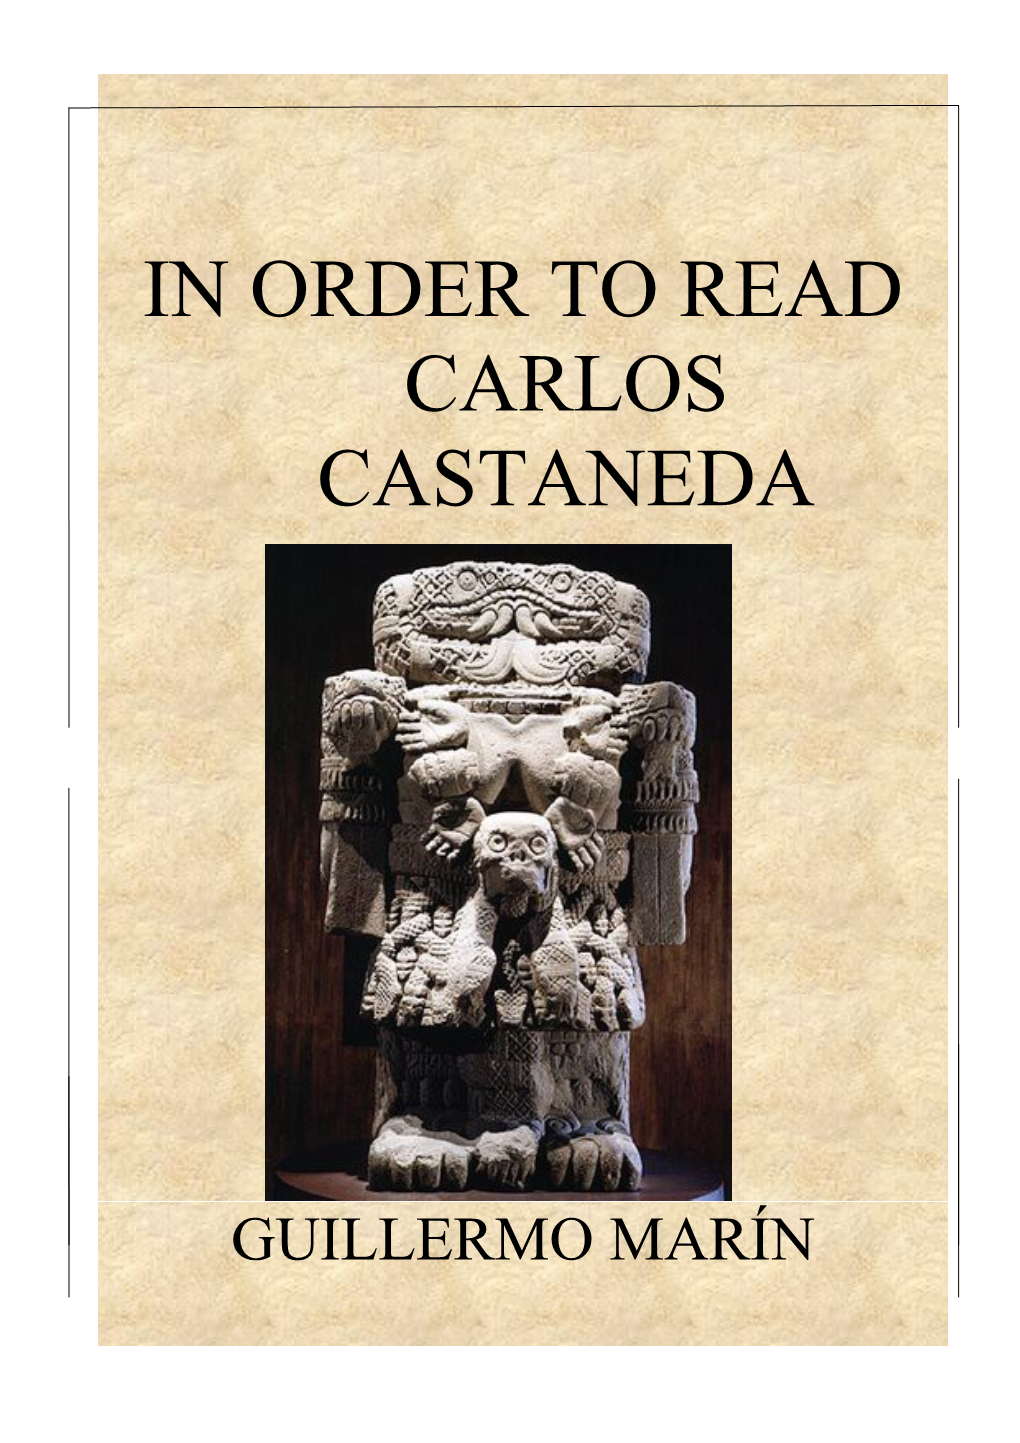 Para Leer a Carlos Castaneda